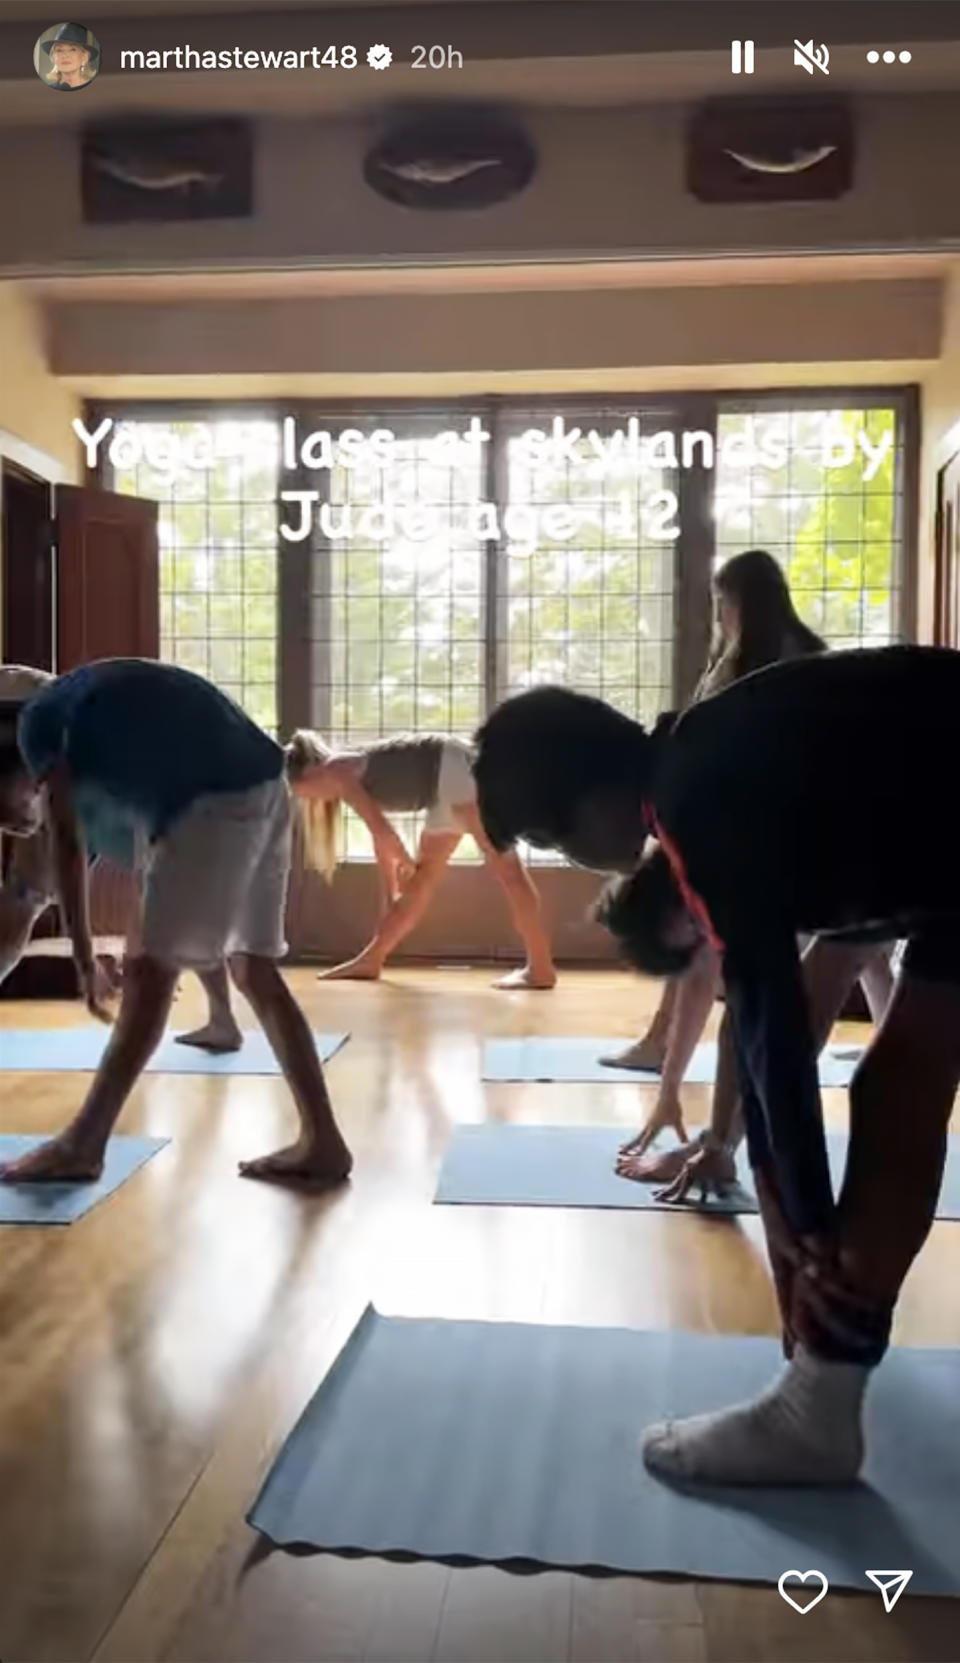 Martha Stewart shared a photo of her granddaughter Jude leading a yoga class. (@marthastewart48 via Instagram)